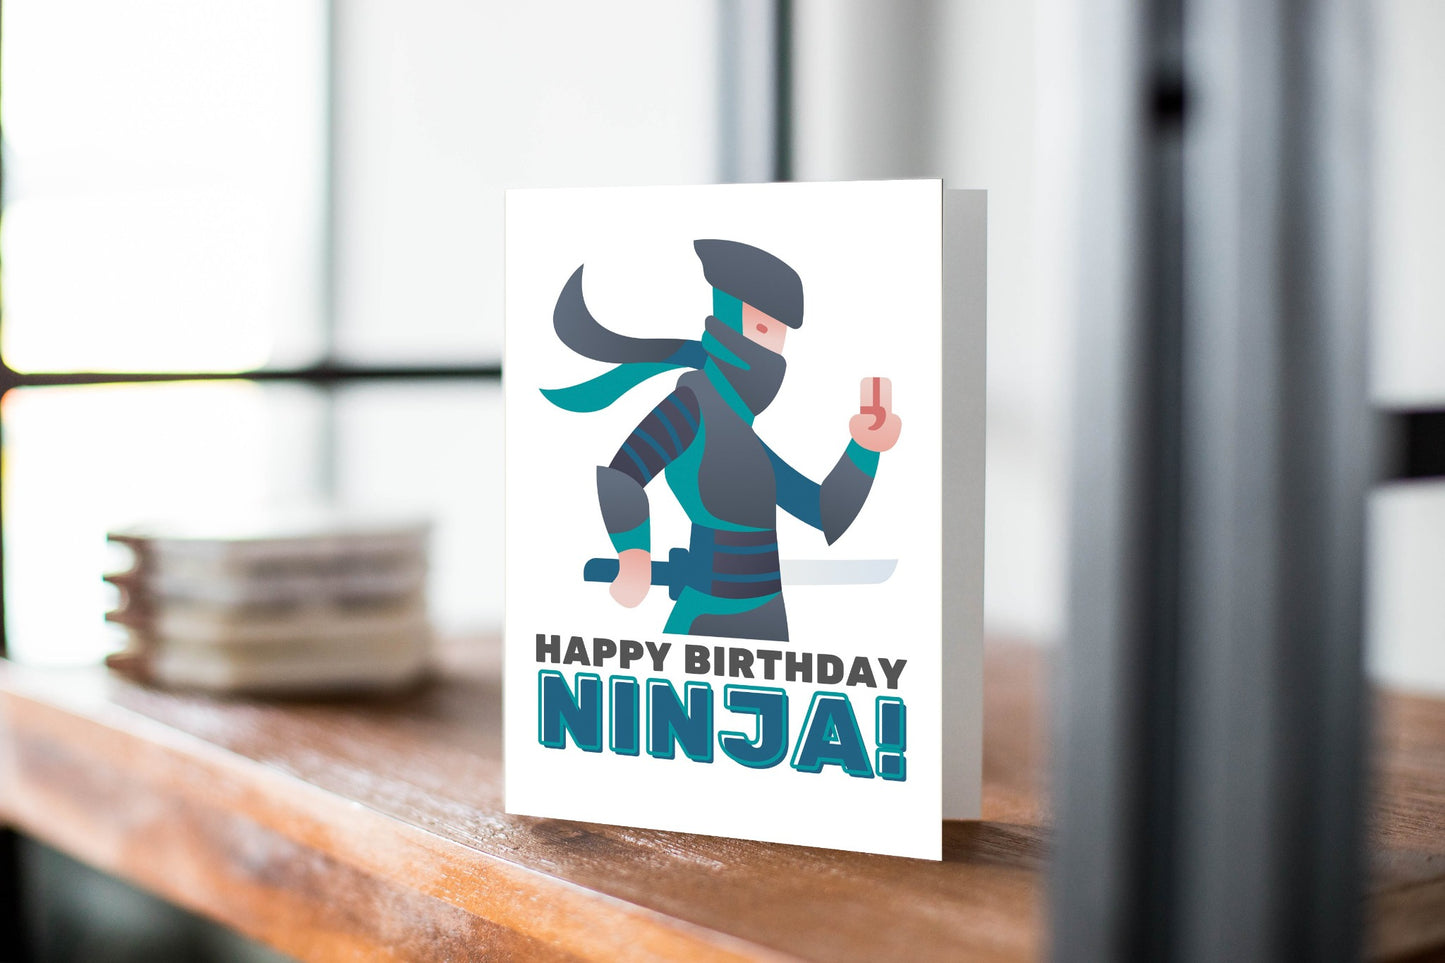 Happy Birthday Ninja Greeting Card.